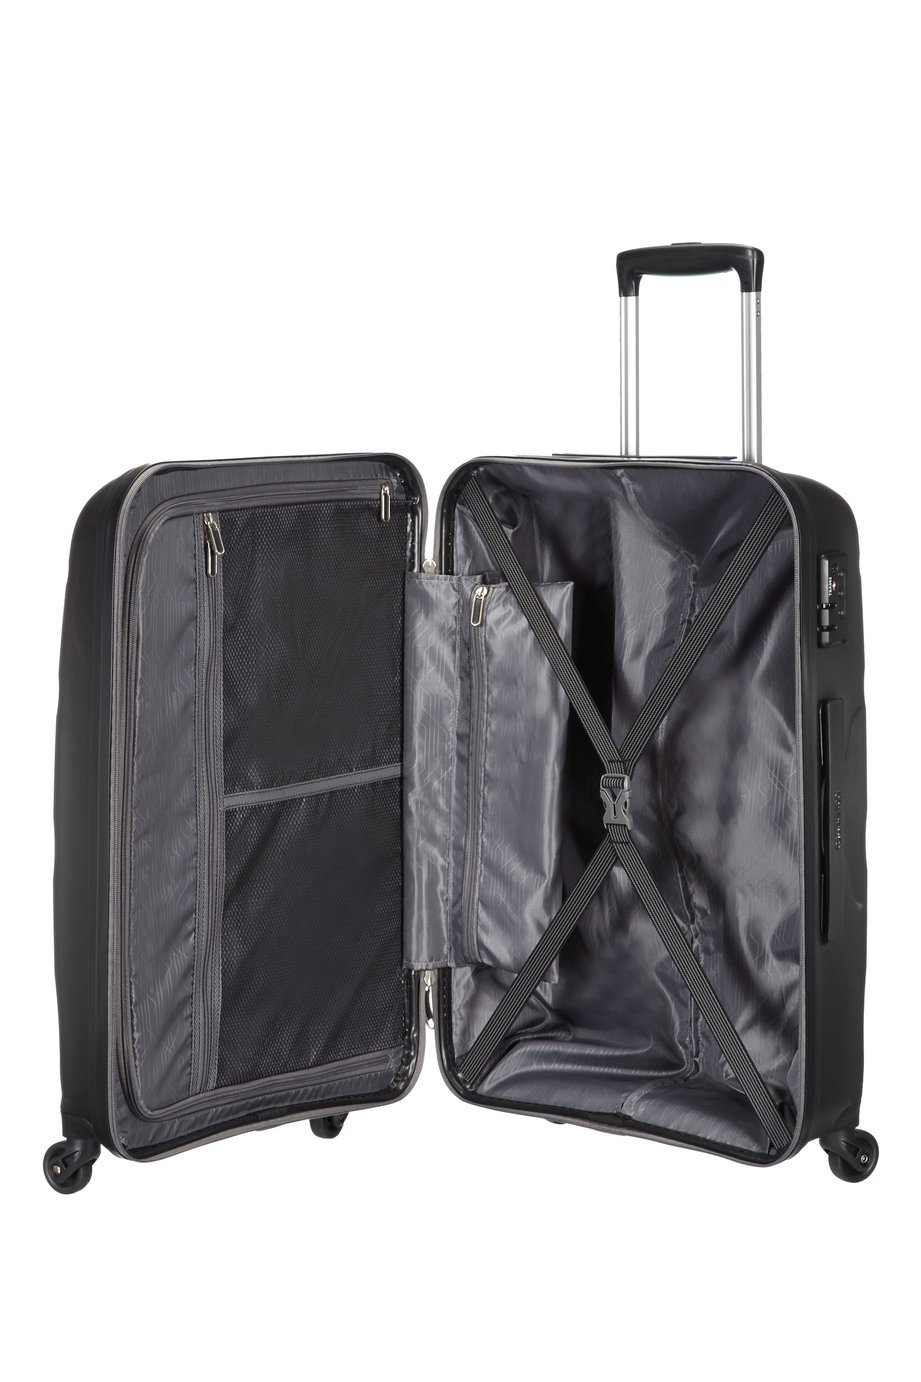 American Tourister Bon Air Hard Medium Suitcase Review